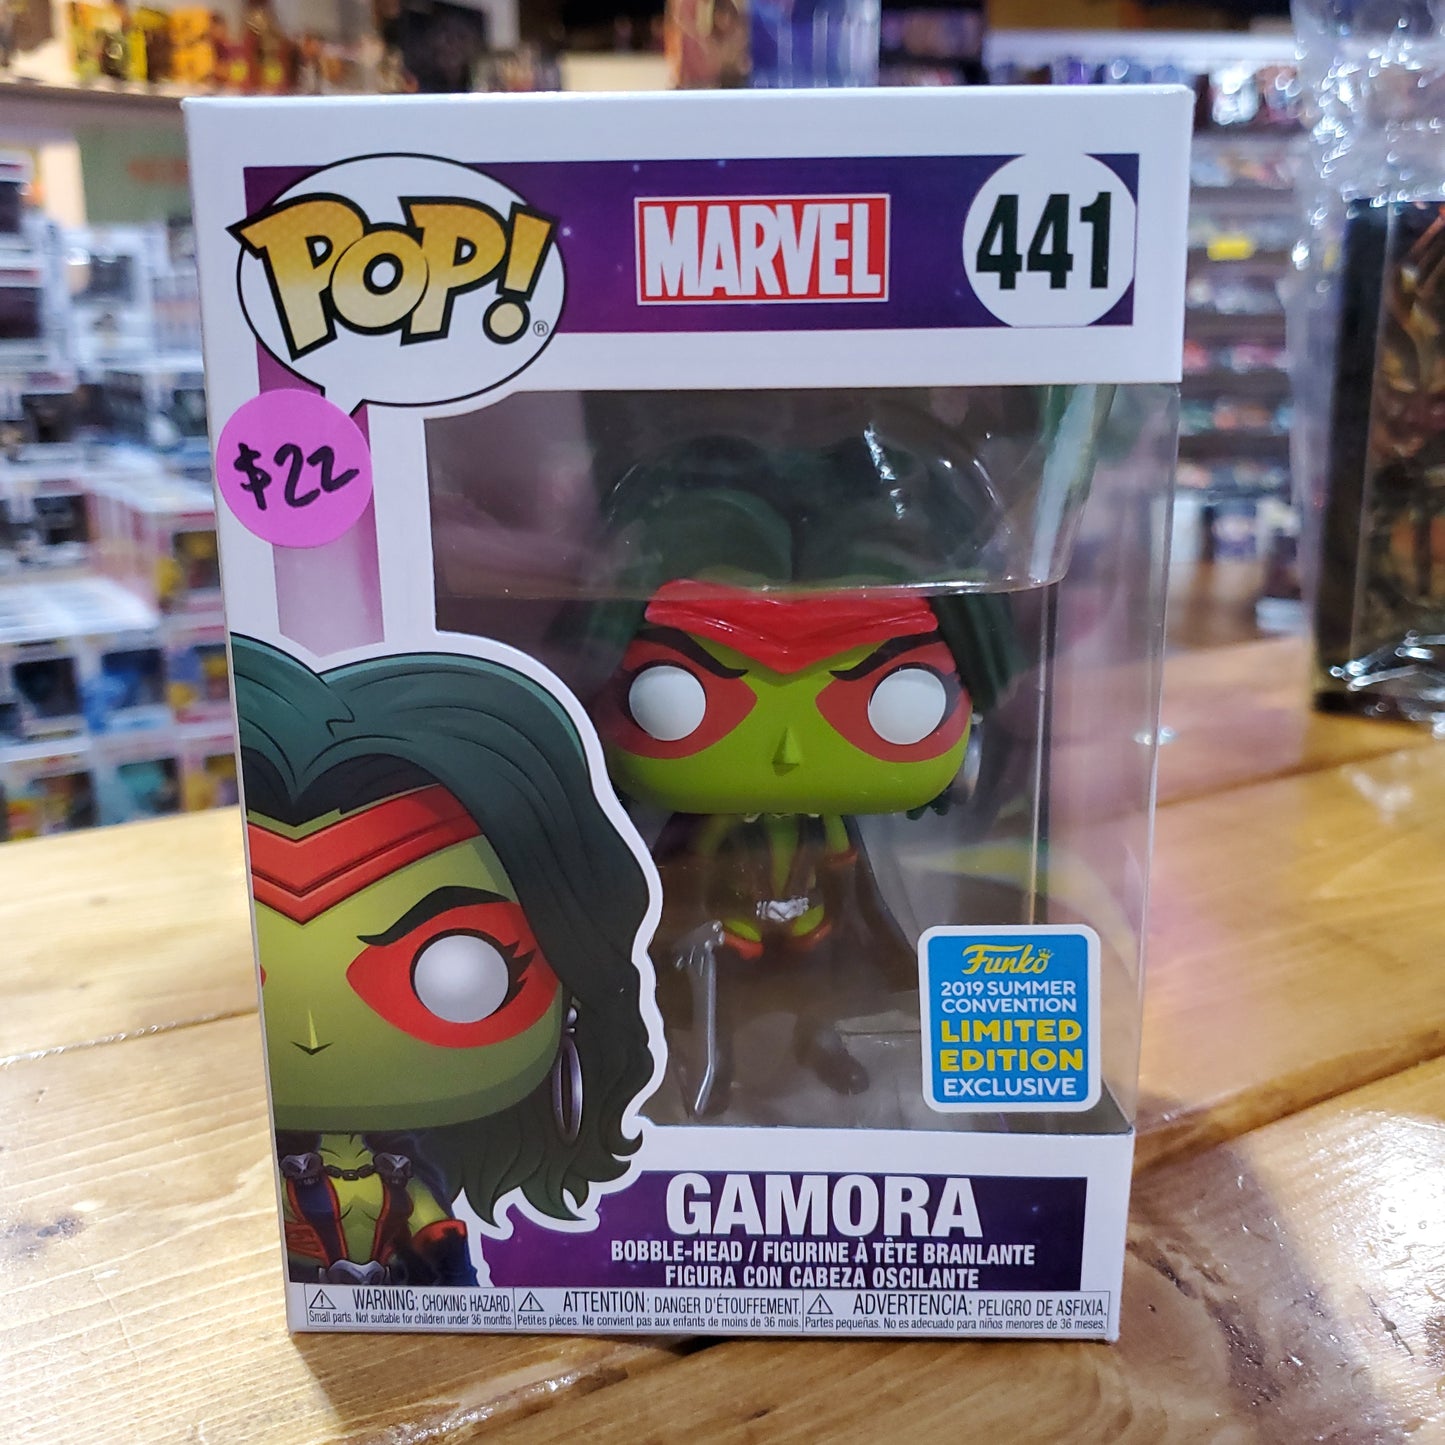 Gamora #441 - Marvel - Funko Pop! Vinyl Figure